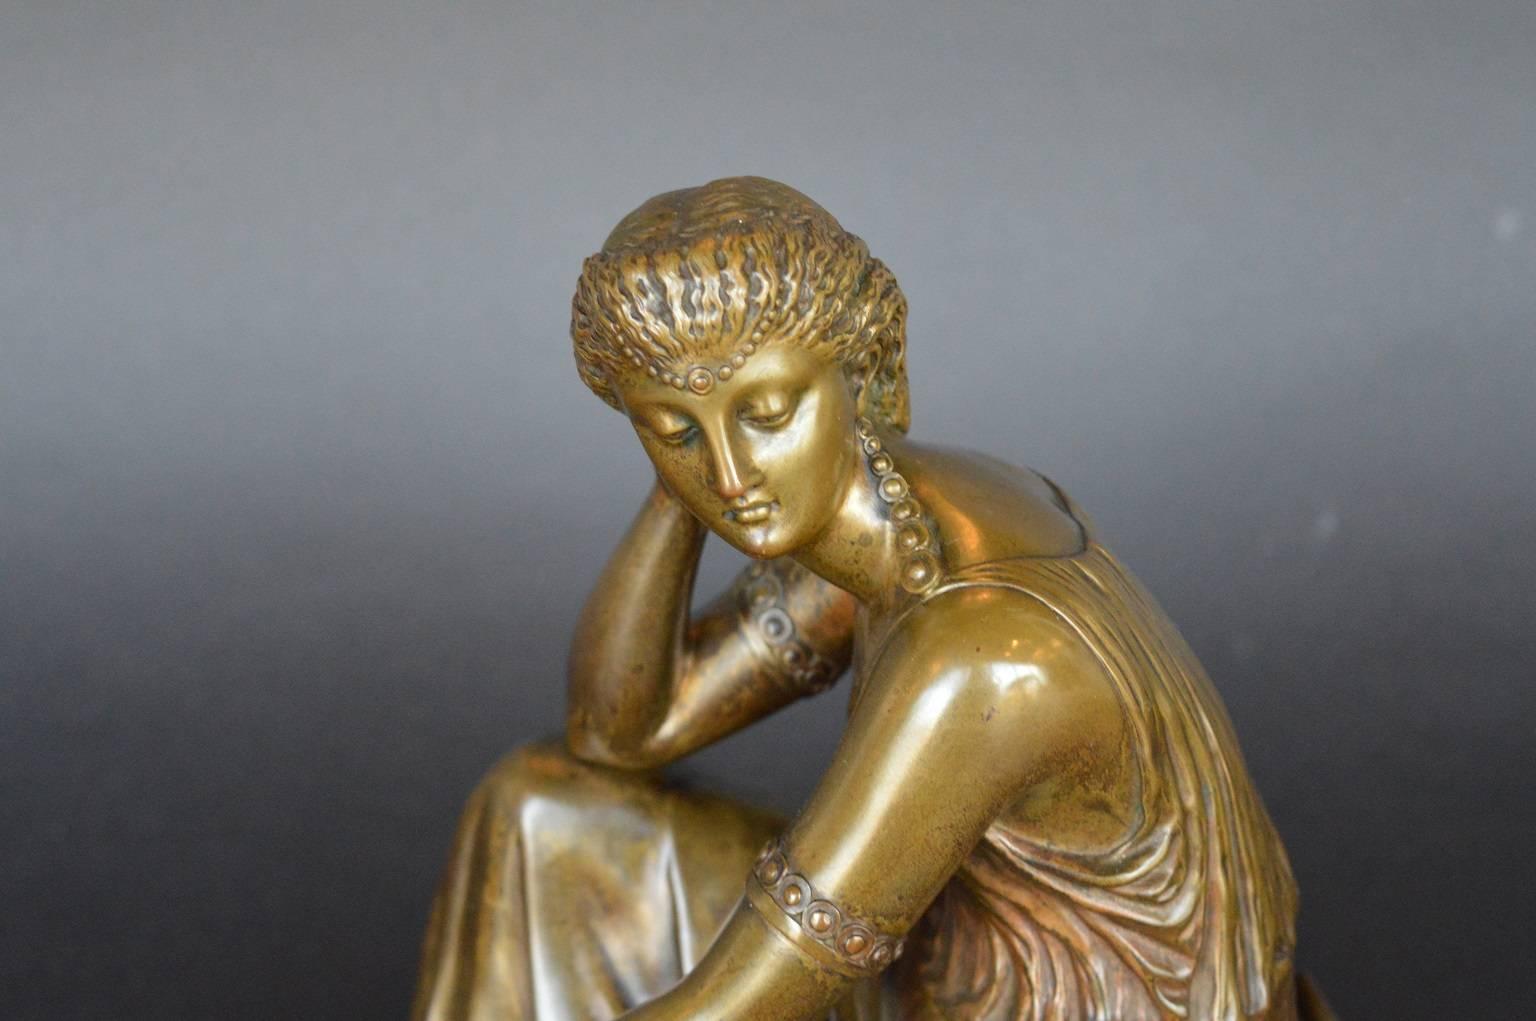 19th century French bronze Art Nouveau classical figural woman.